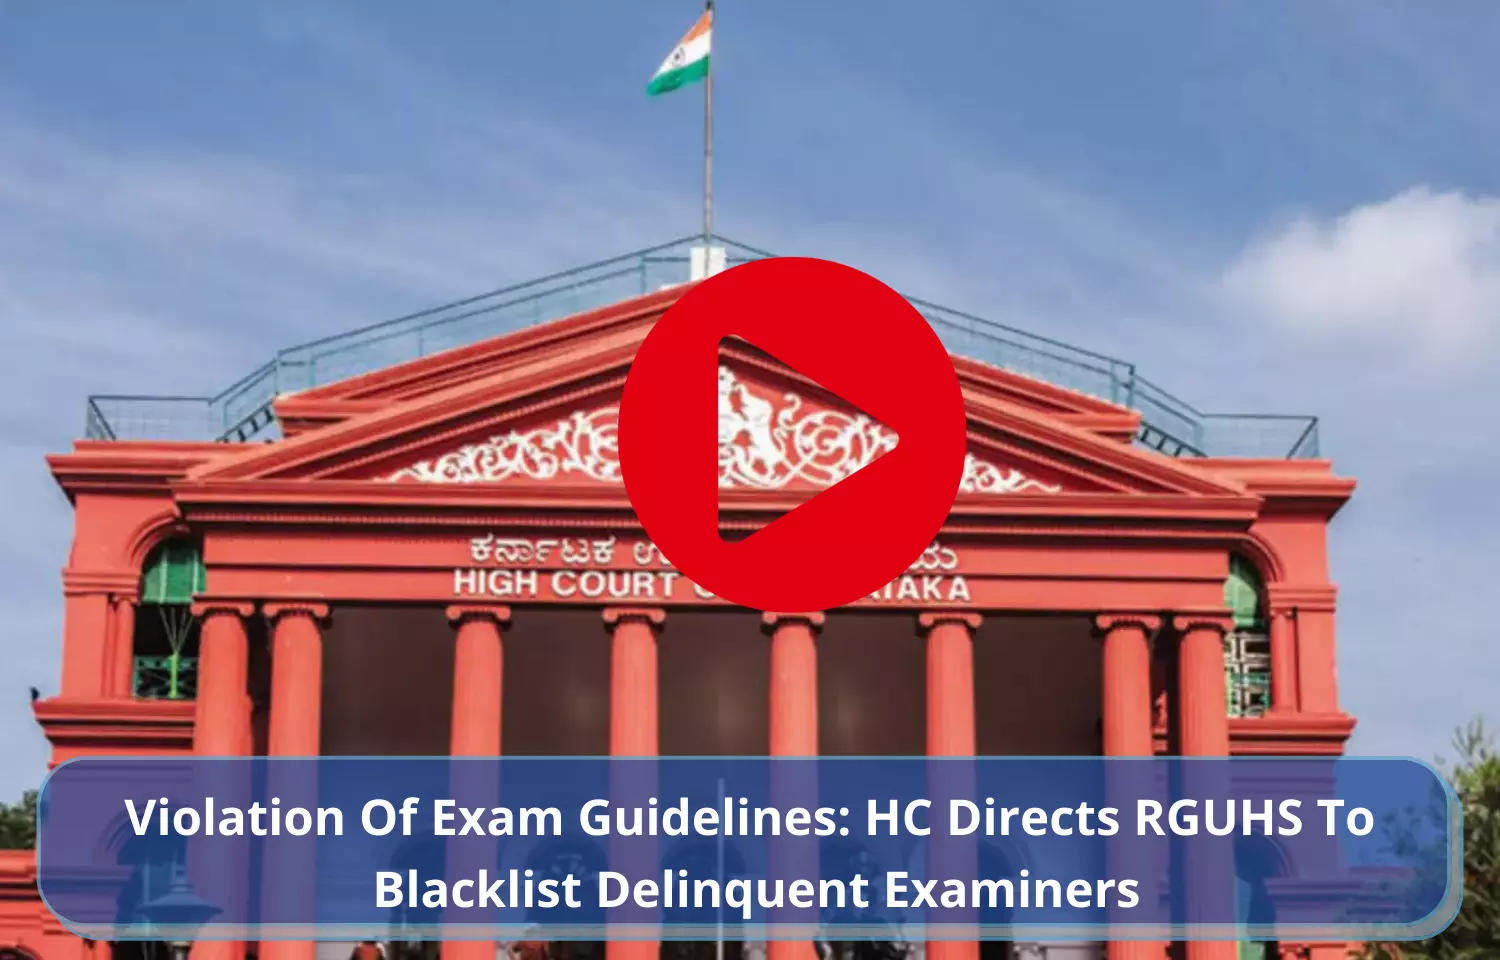 Exam guidelines violation: Karnataka HC directs RGUHS to blacklist faulty examiners